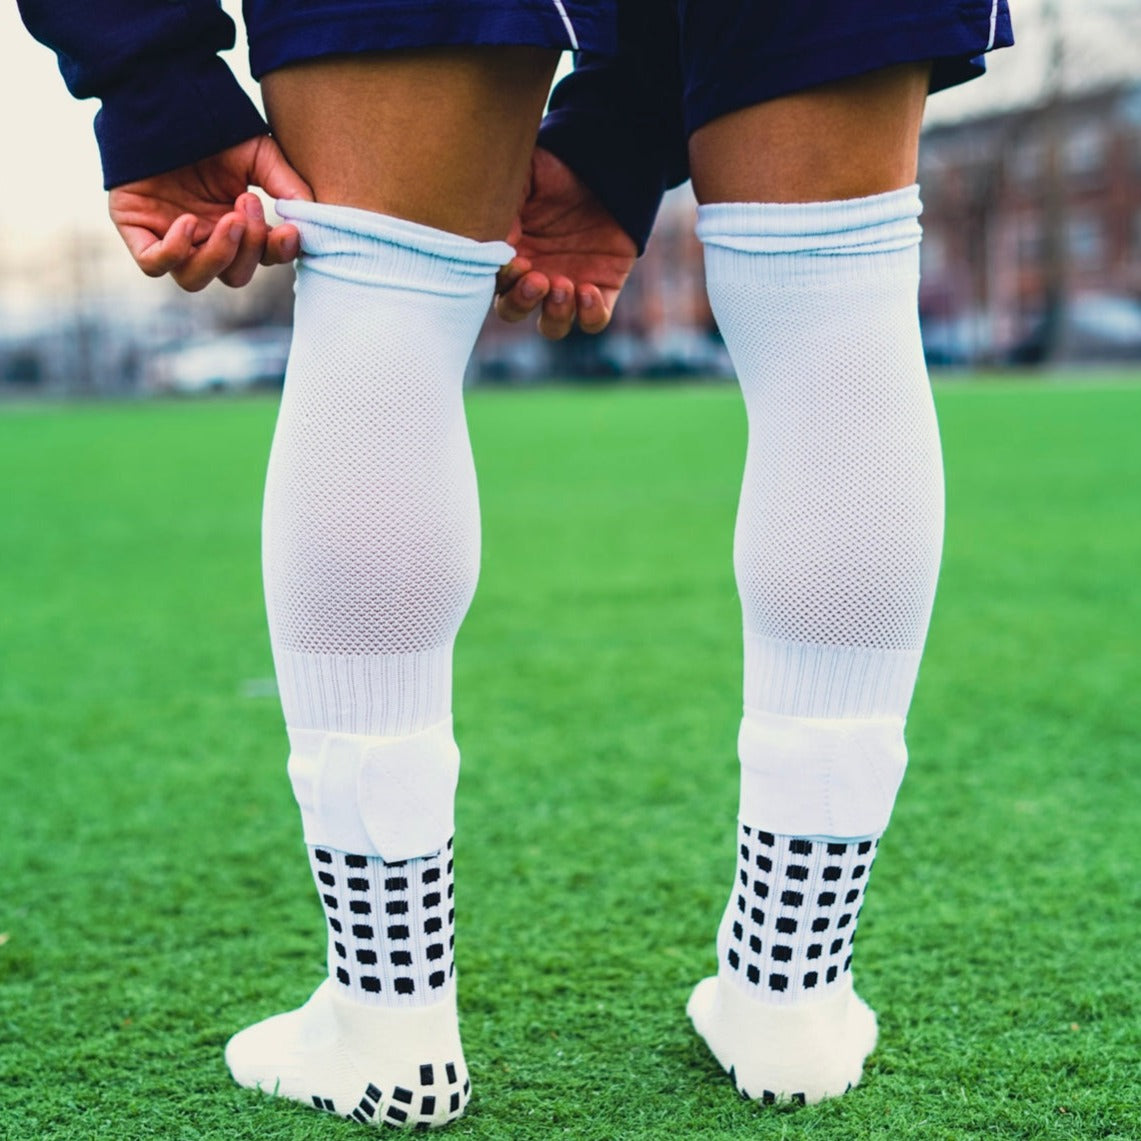 Soccer shoes . Knee pads socks - Team sports